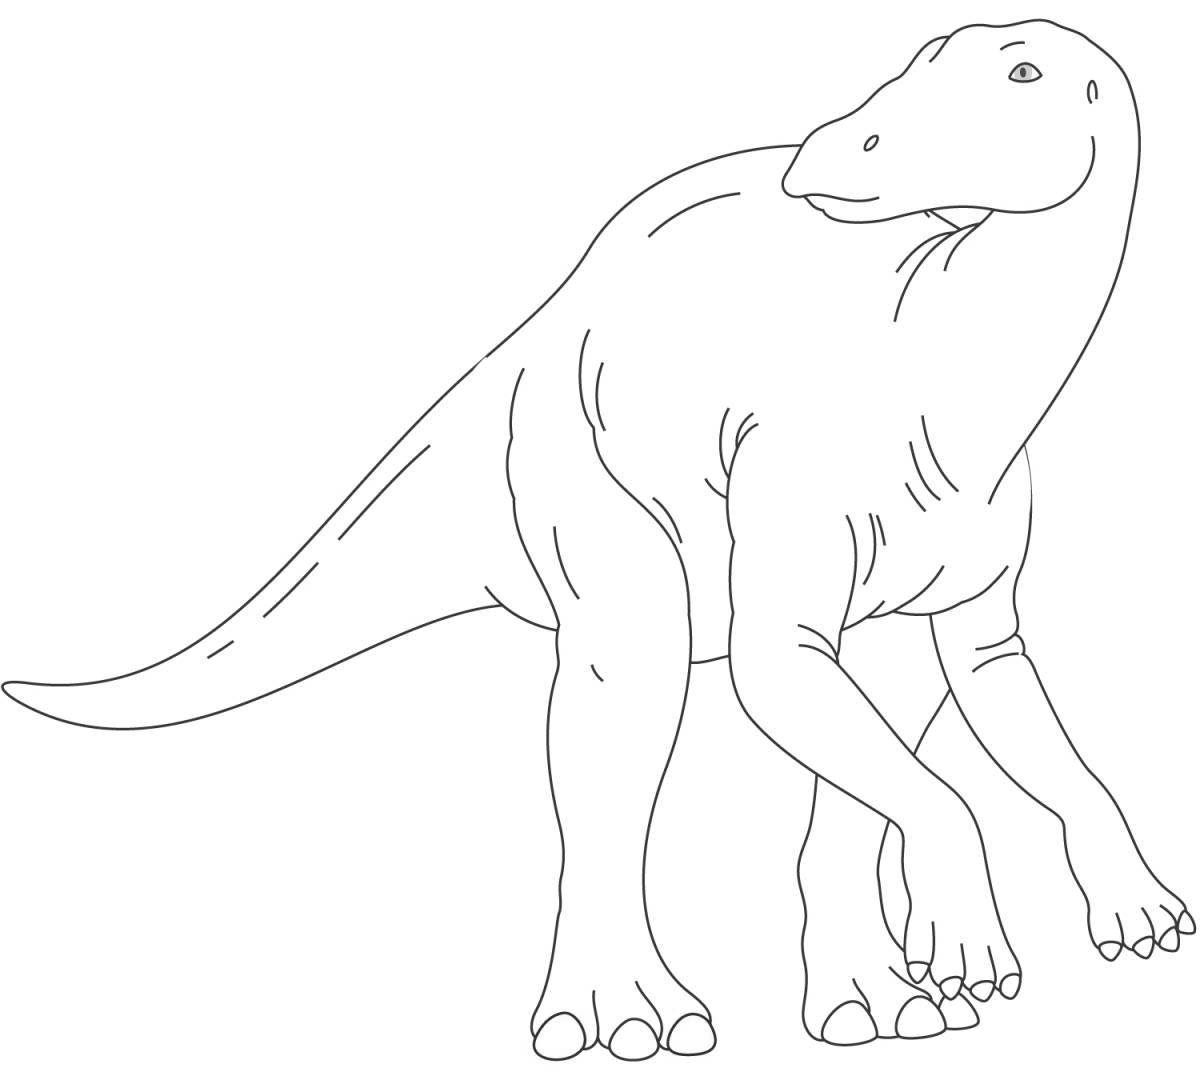 Coloring book magical iguanodon